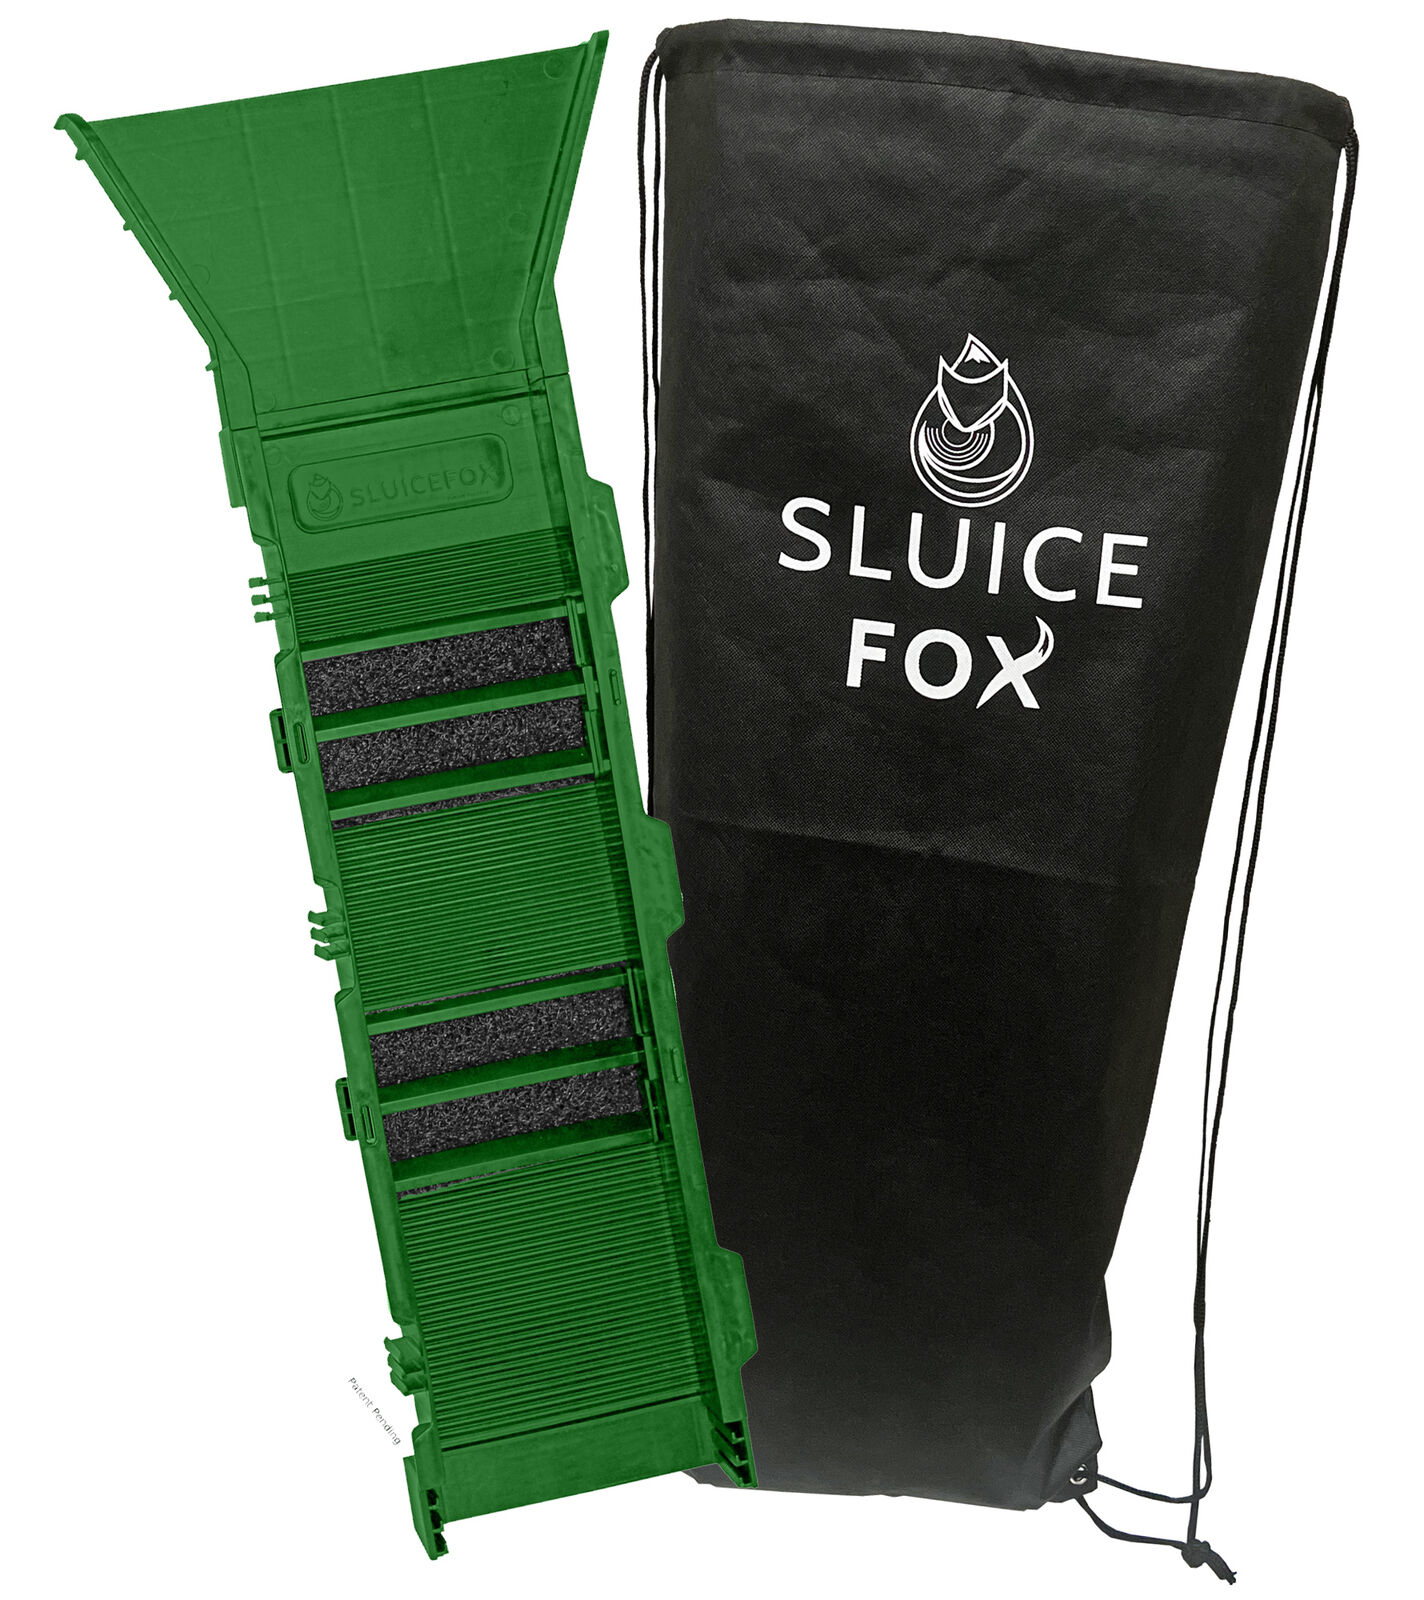 Sluice Fox portable gold sluice box and stream flare tool for prospecting - 31